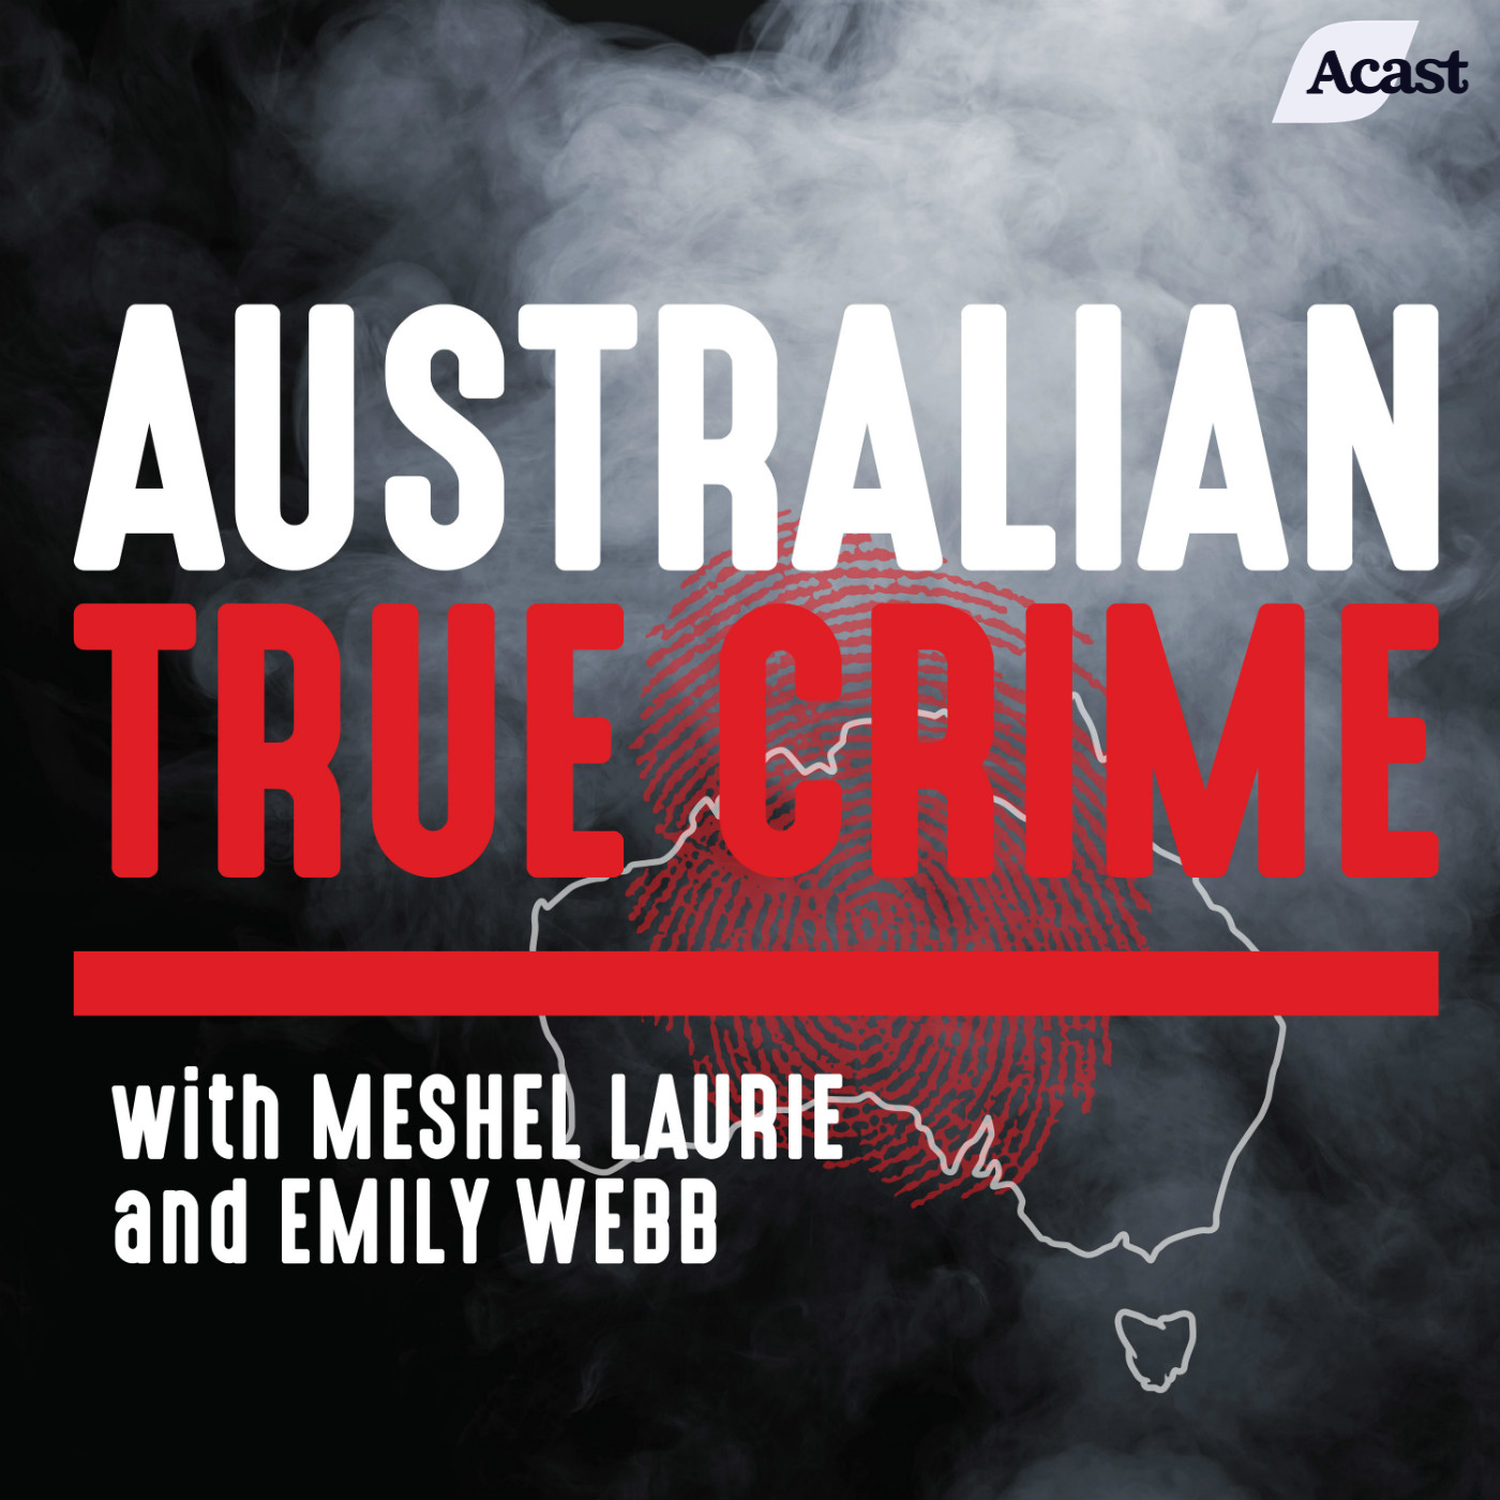 Muck Rack Australian True Crime Contact Information Journalists And Overview